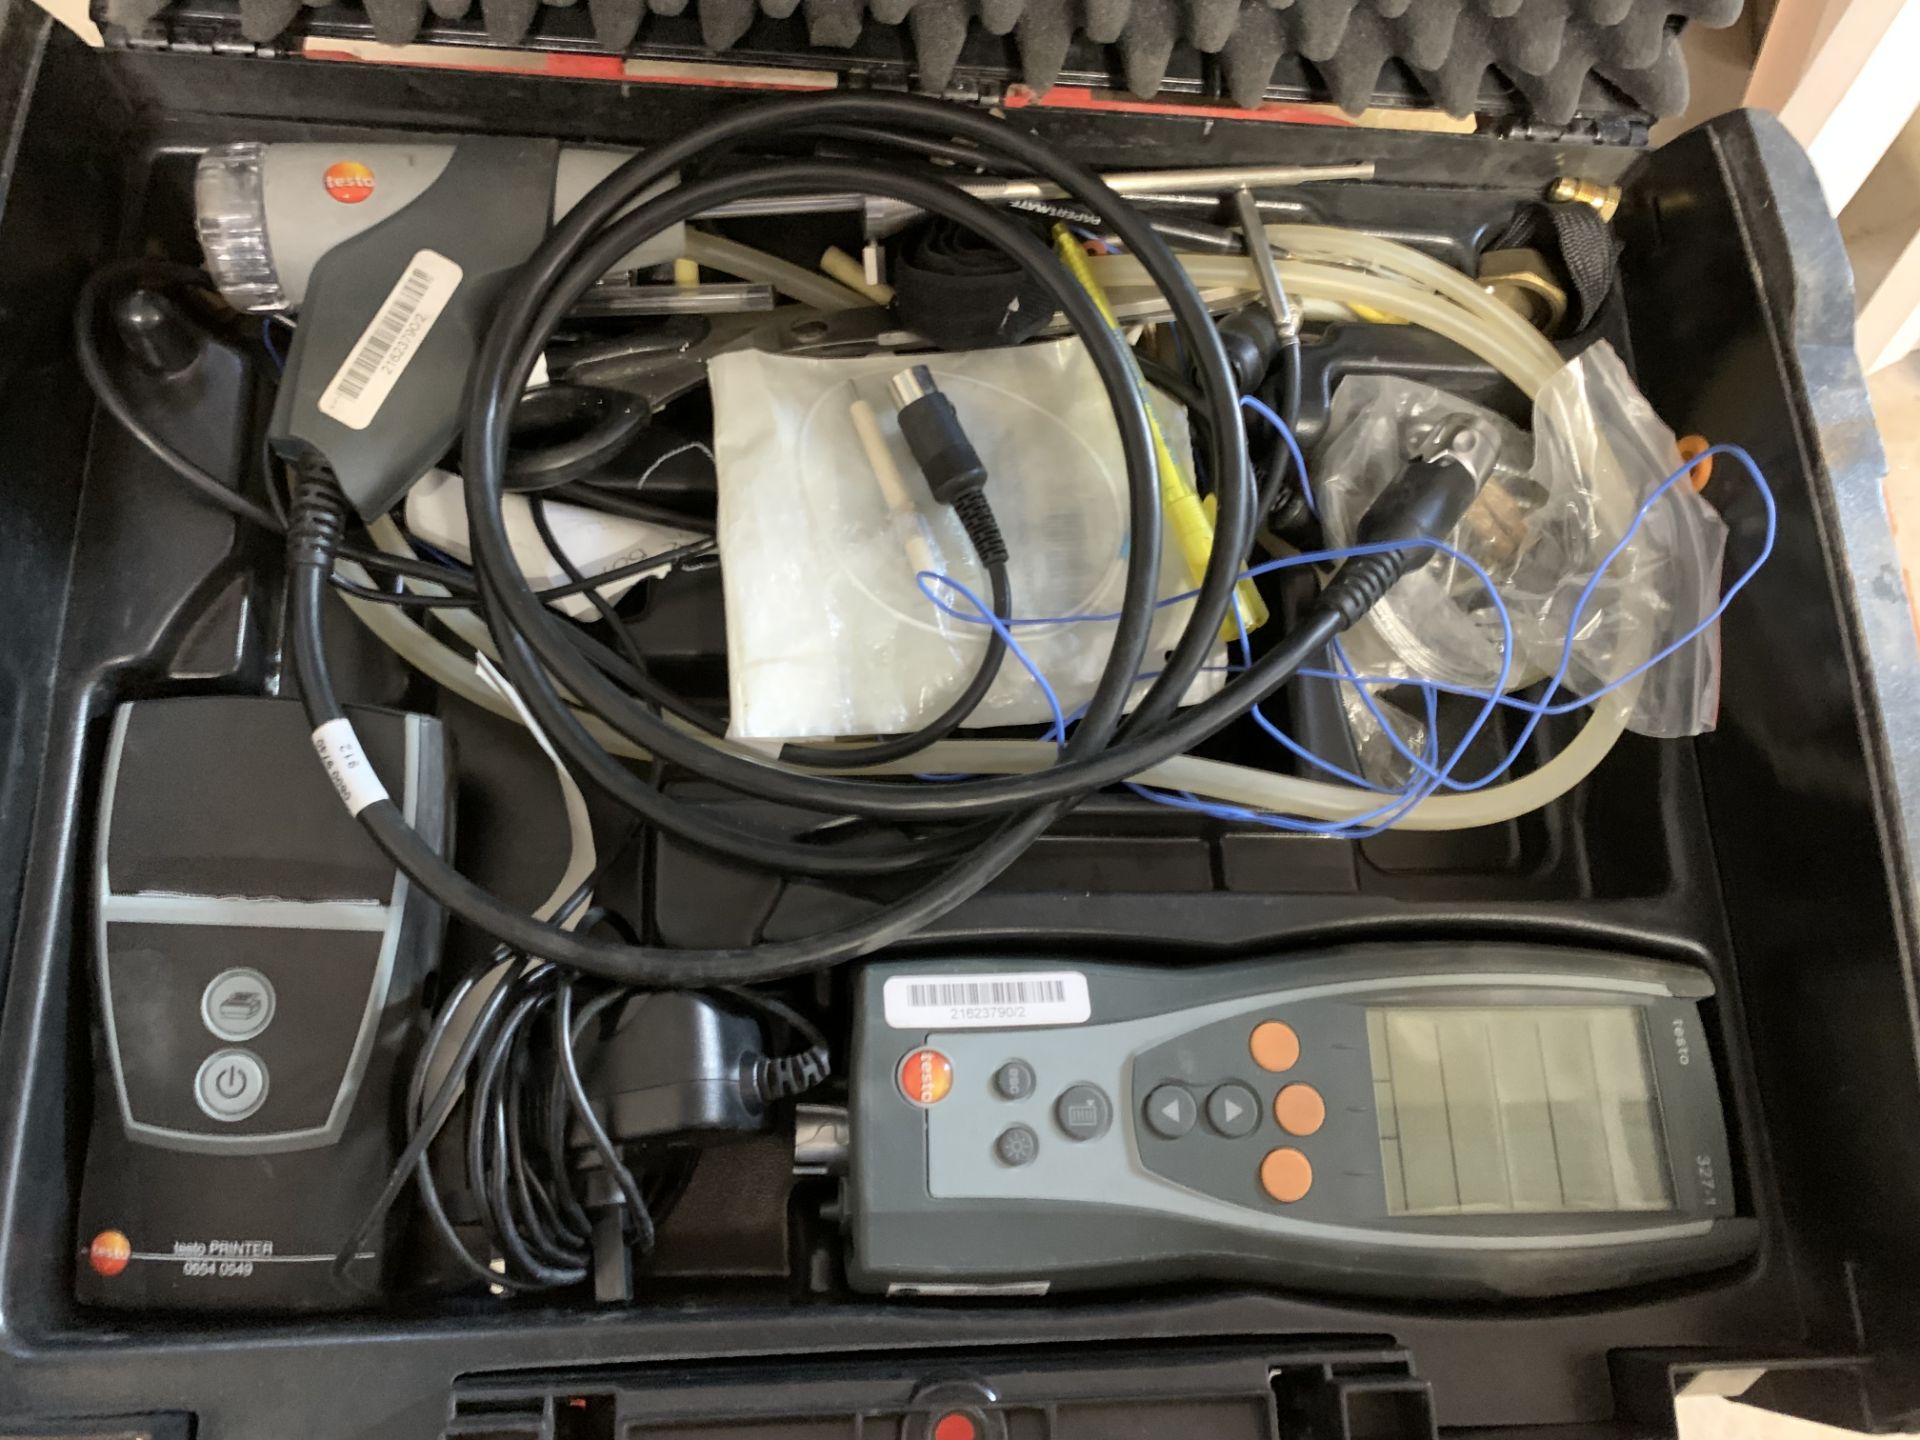 Cased Testo 327-1 Flue Gas Analyser Kit